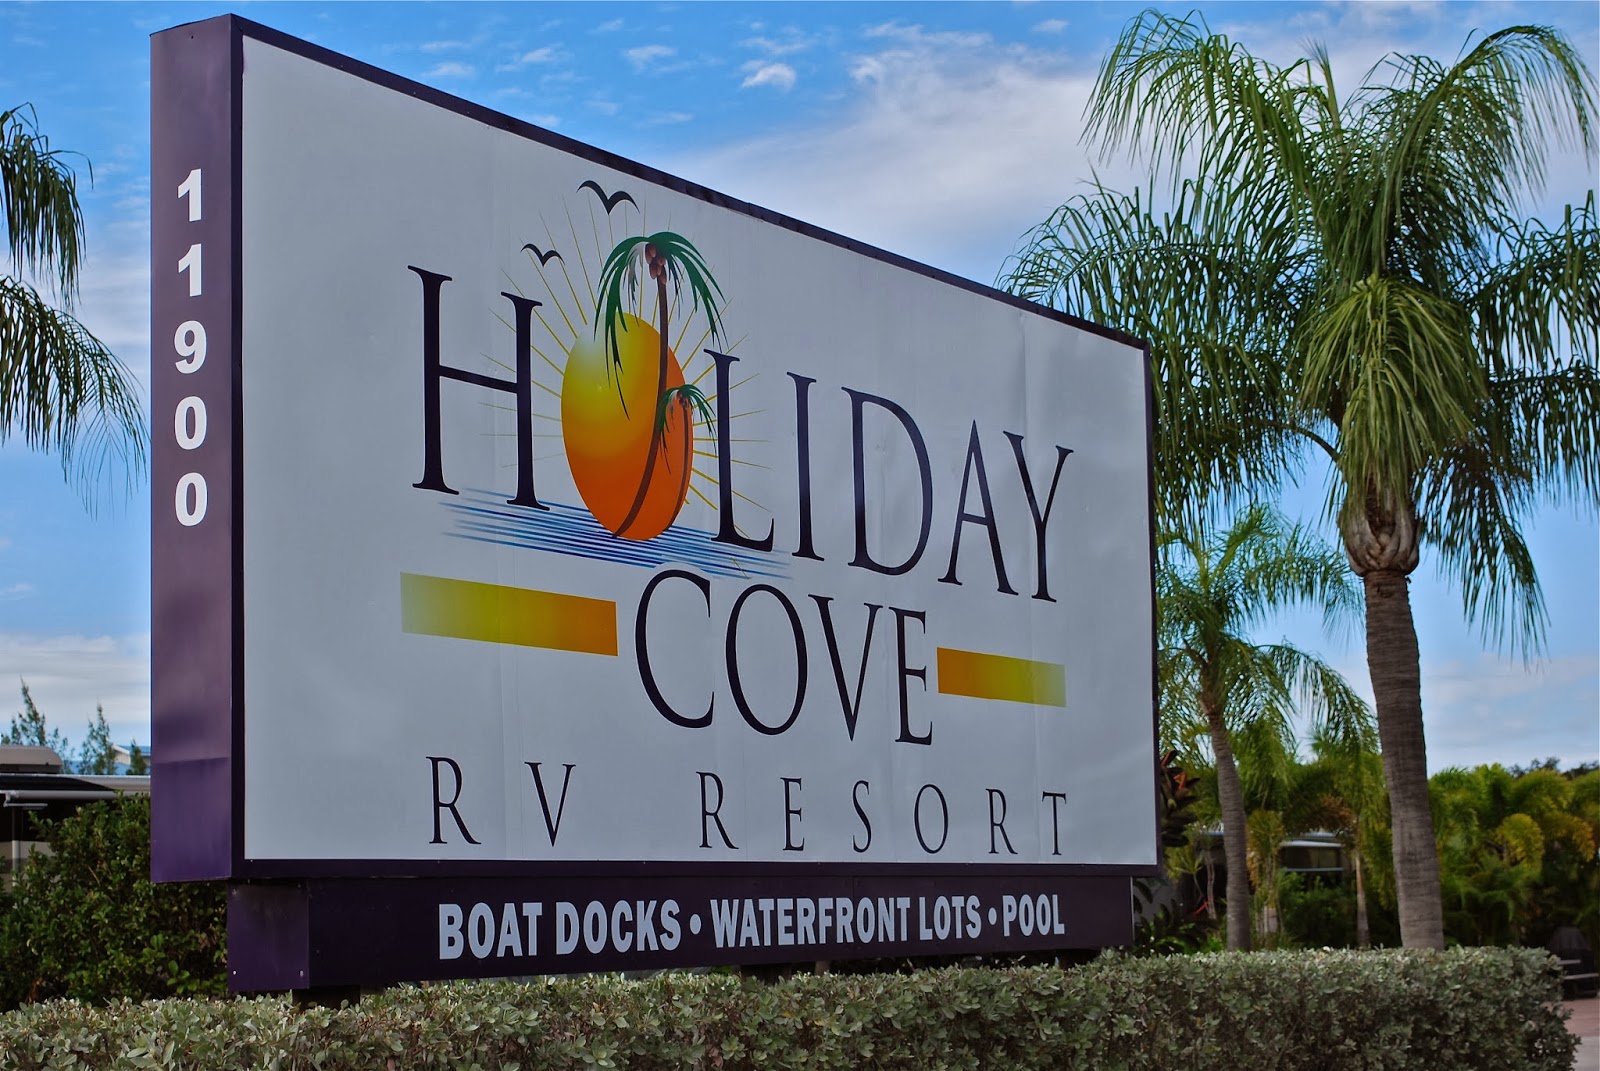 BLUE SKY AHEAD Holiday Cove RV Resort